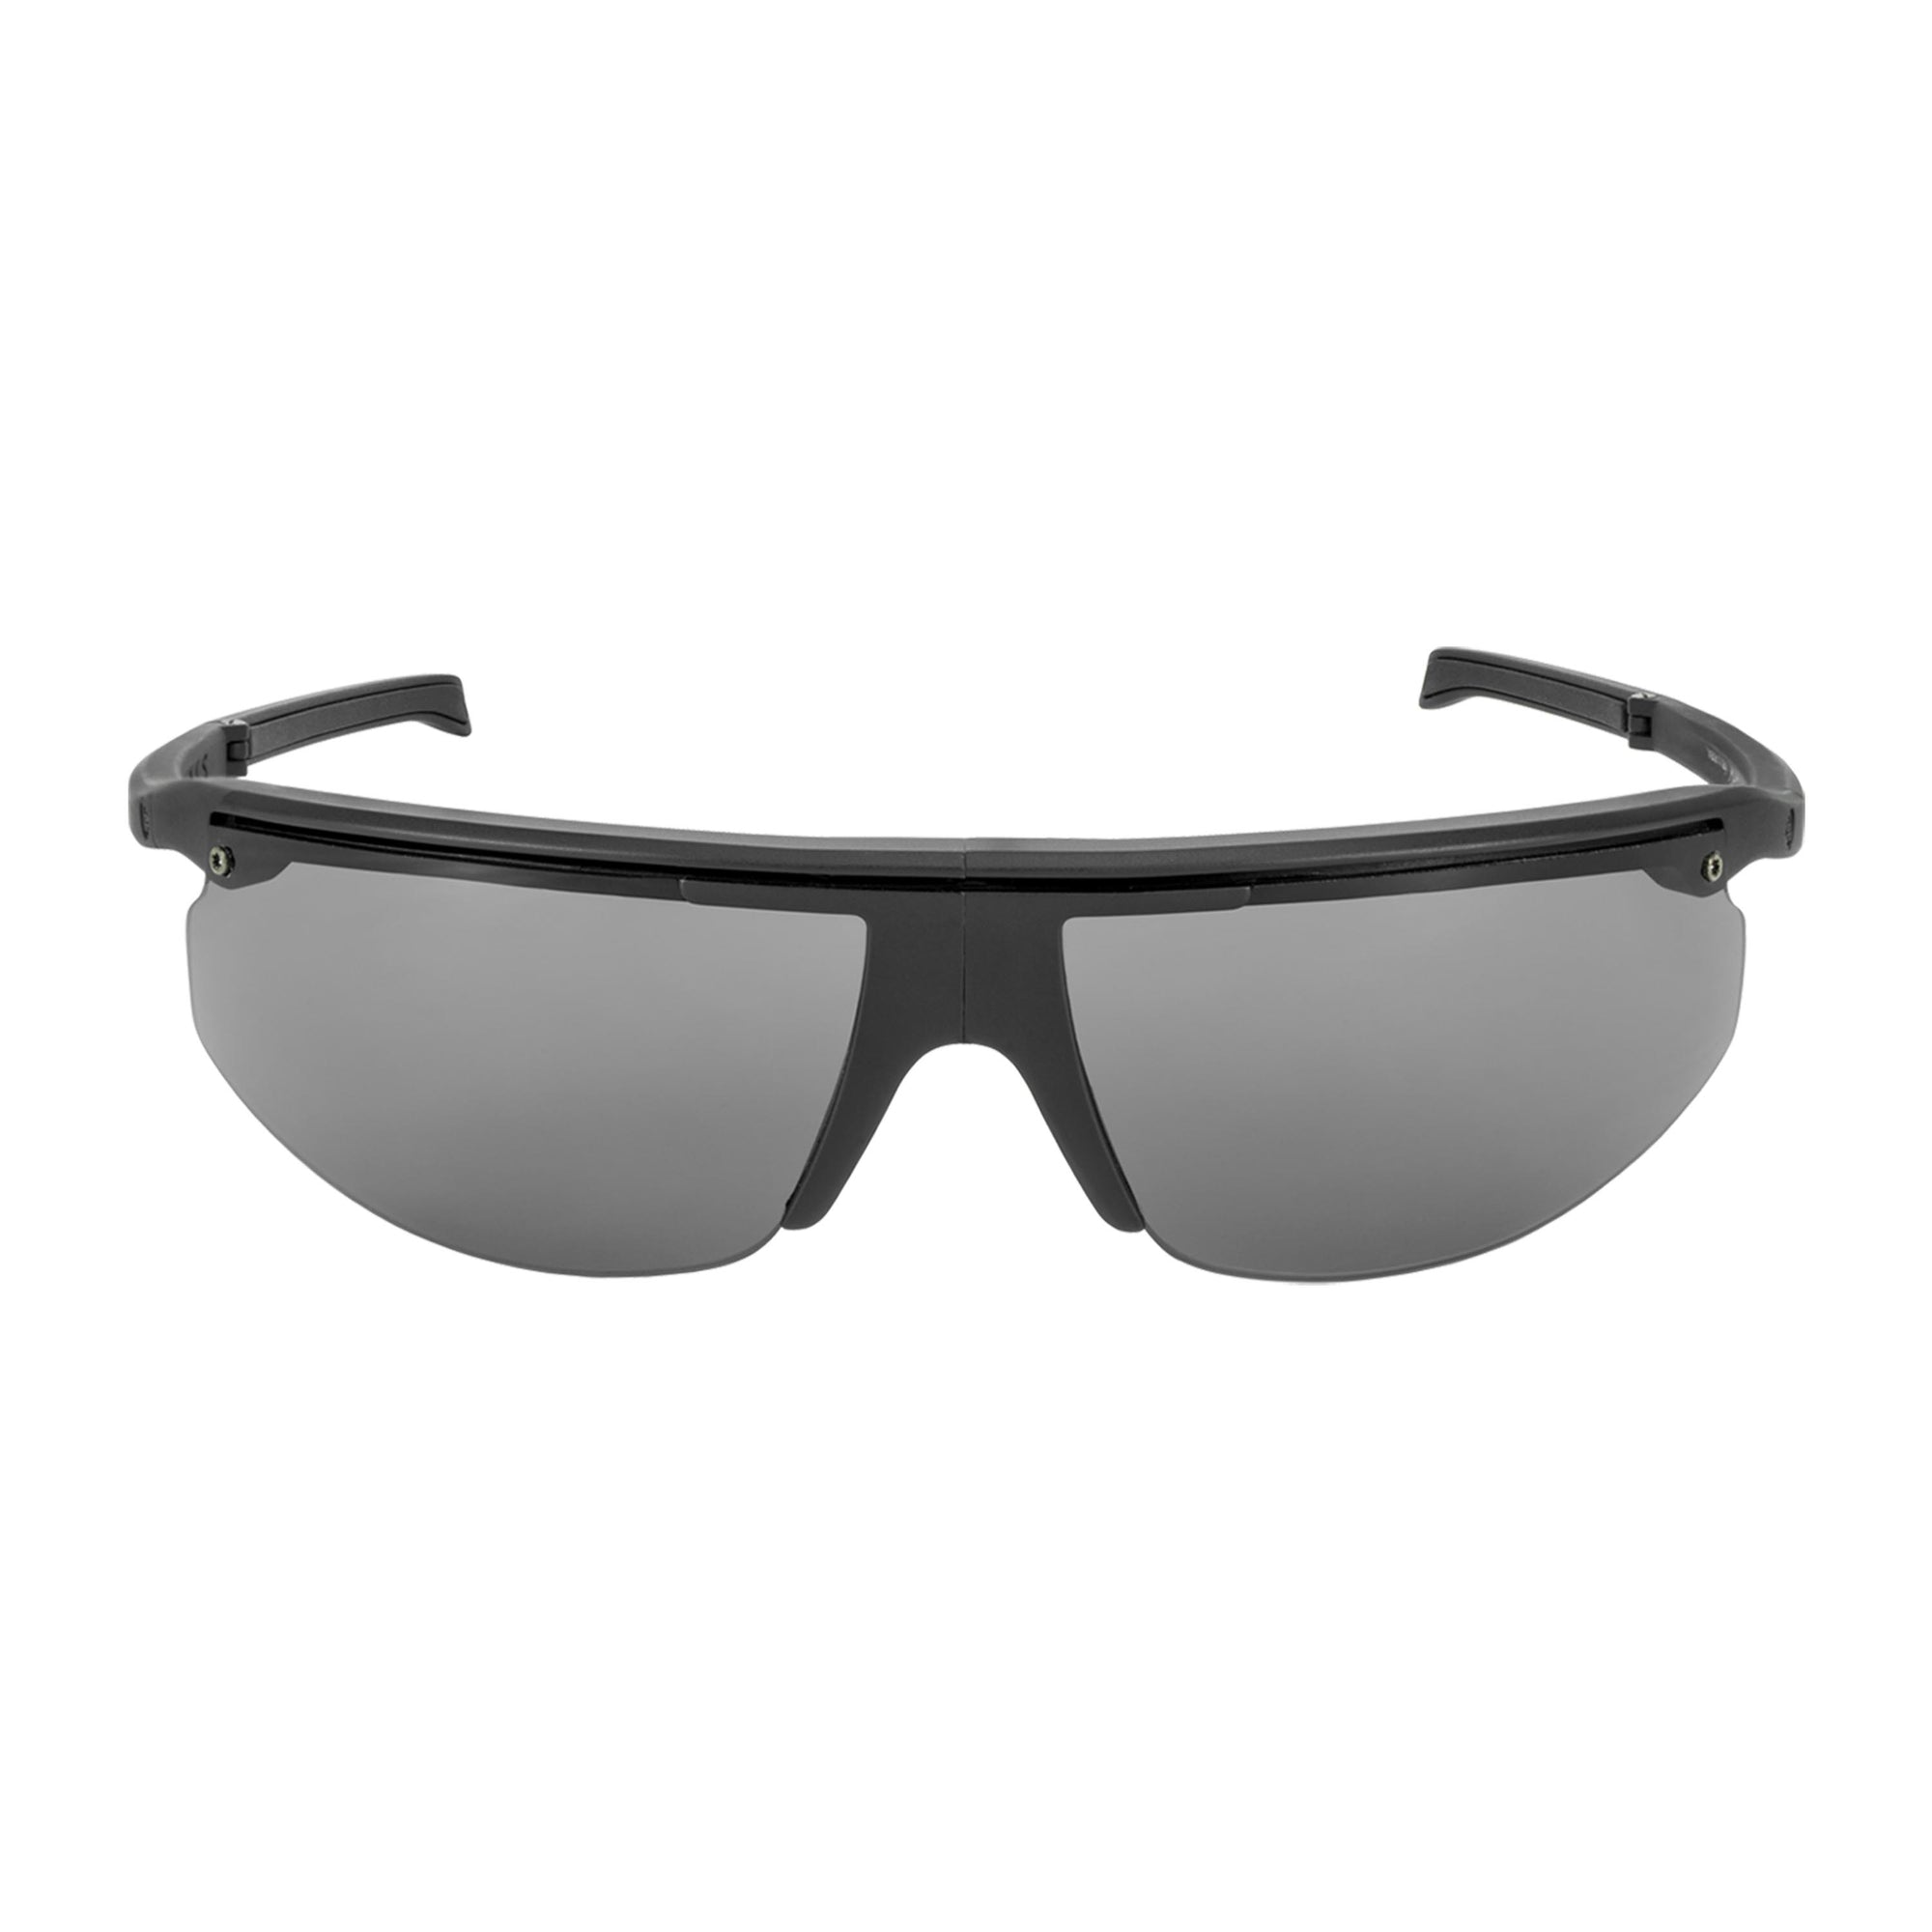 Popticals, Premium Compact Sunglasses, PopStar, 010040-BMGP, Polarized Sunglasses, Matte Black Frame, Gray Lenses, Front View